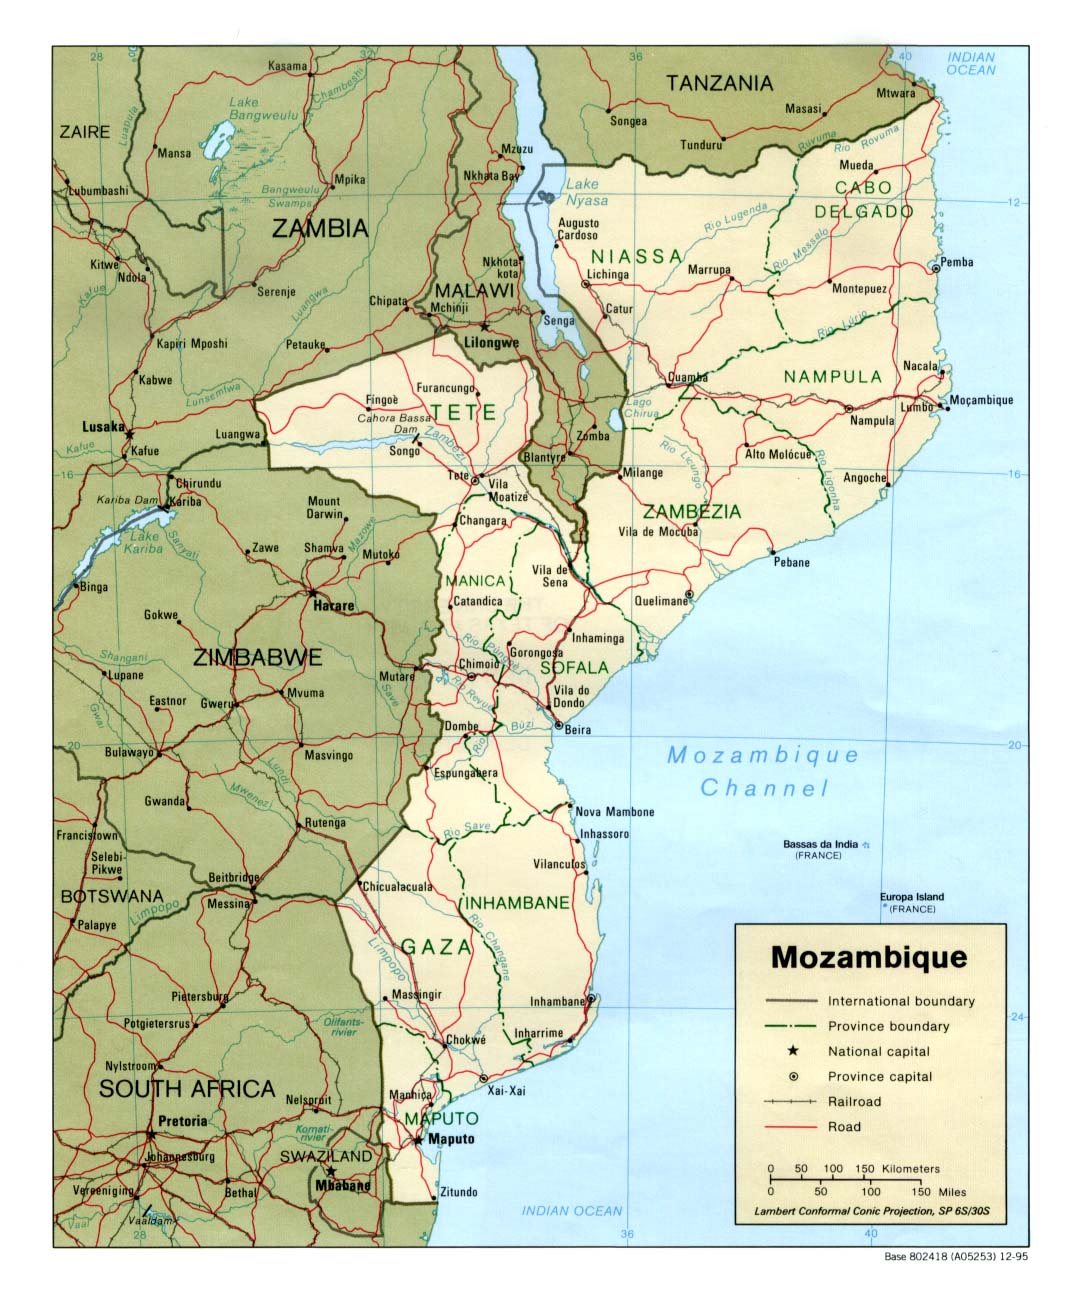 PopulationData.net : MOZAMBIQUE